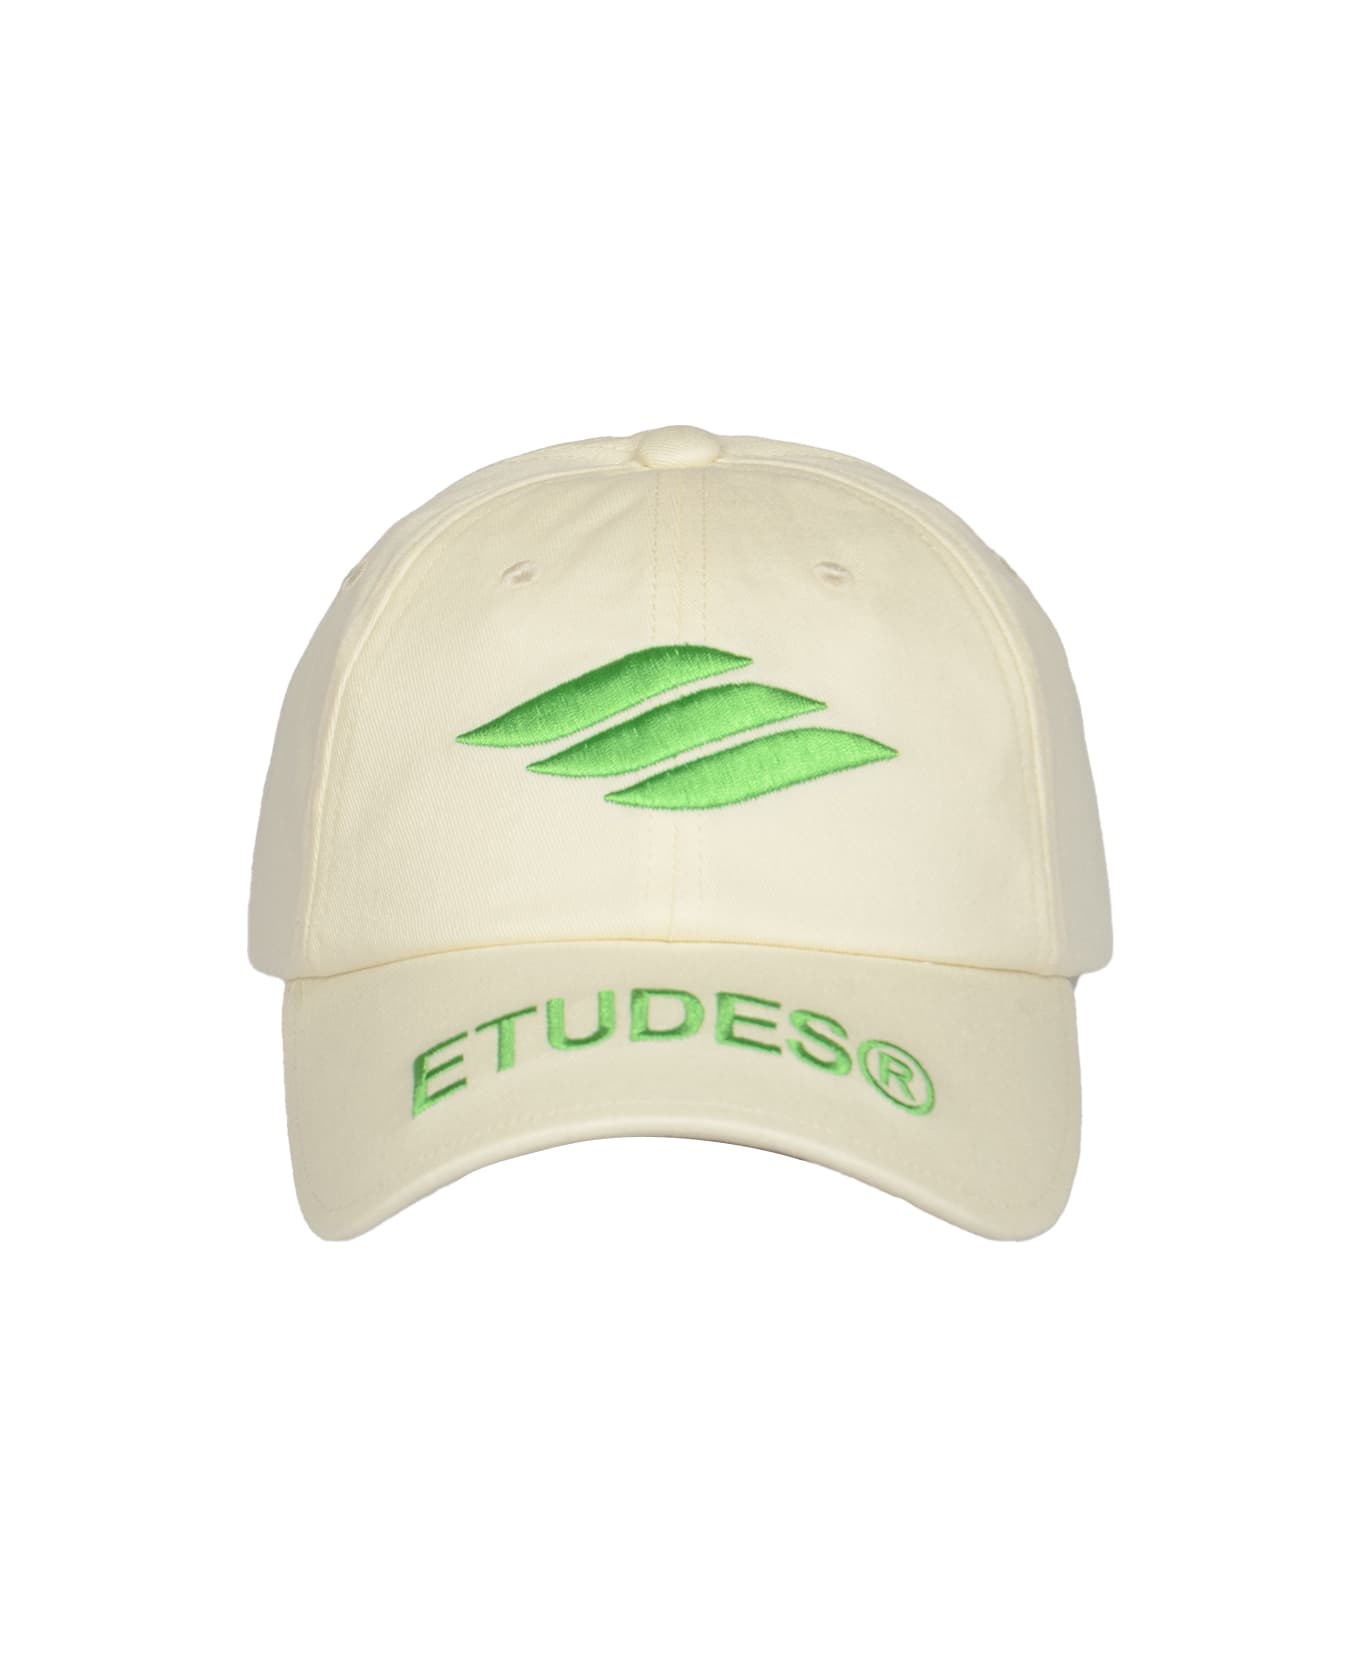 Études Booster Eco Baseball Cap - Bianco